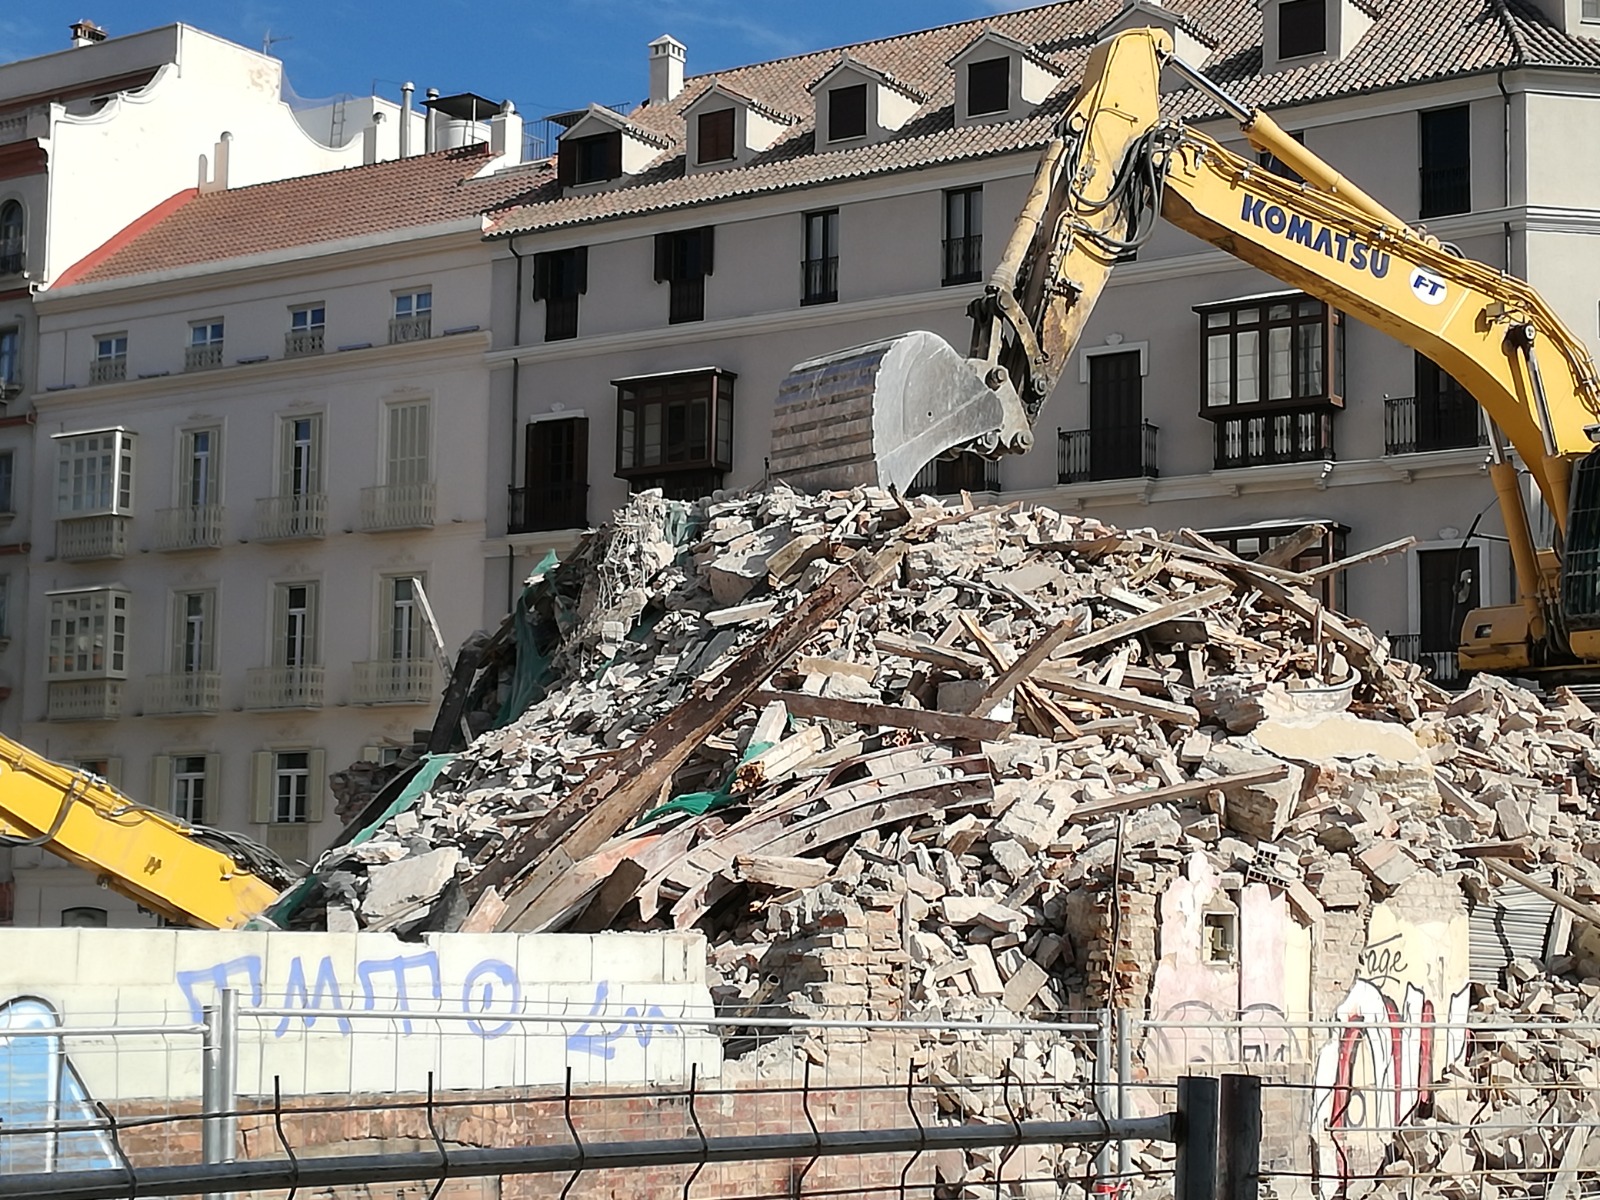 Casa para Isabel Loring Heredia, demolición vista desde Pasillo de Atocha, 31 marzo de 2019.